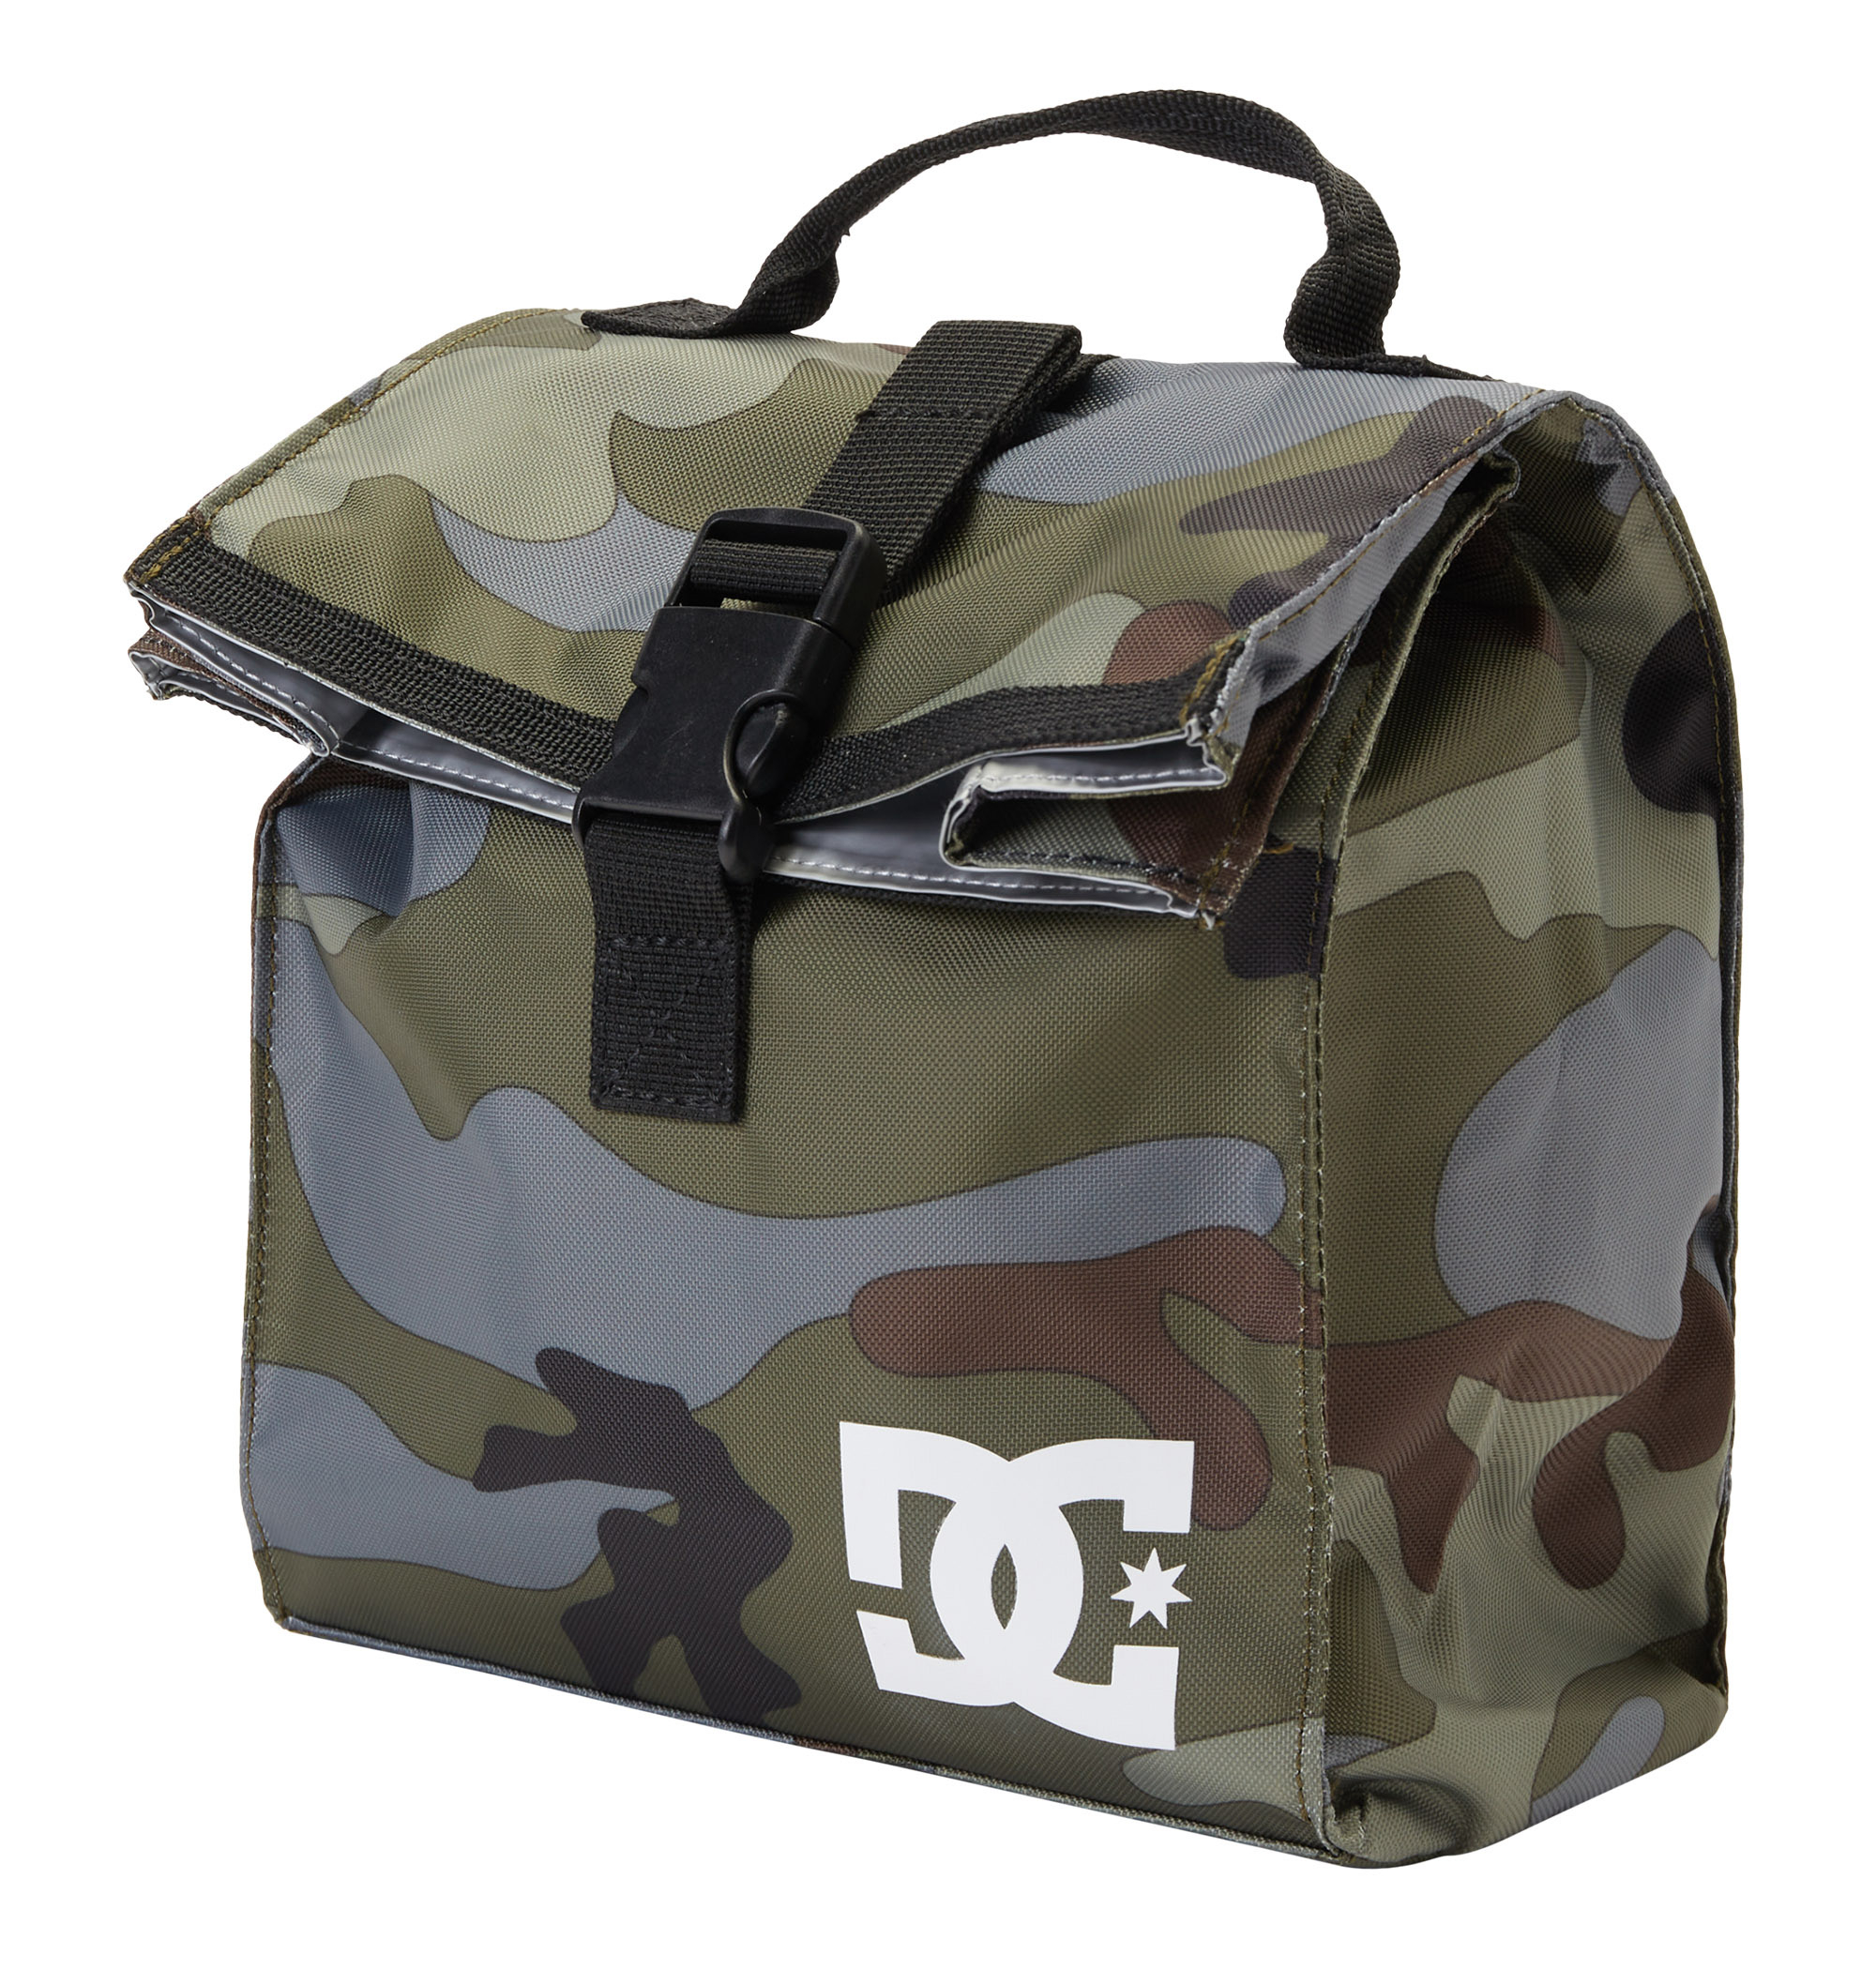  LUNCH BREAK BAG ミニマムなデザインにロゴマークがさりげなく光るスクエアタイプのランチバッグ